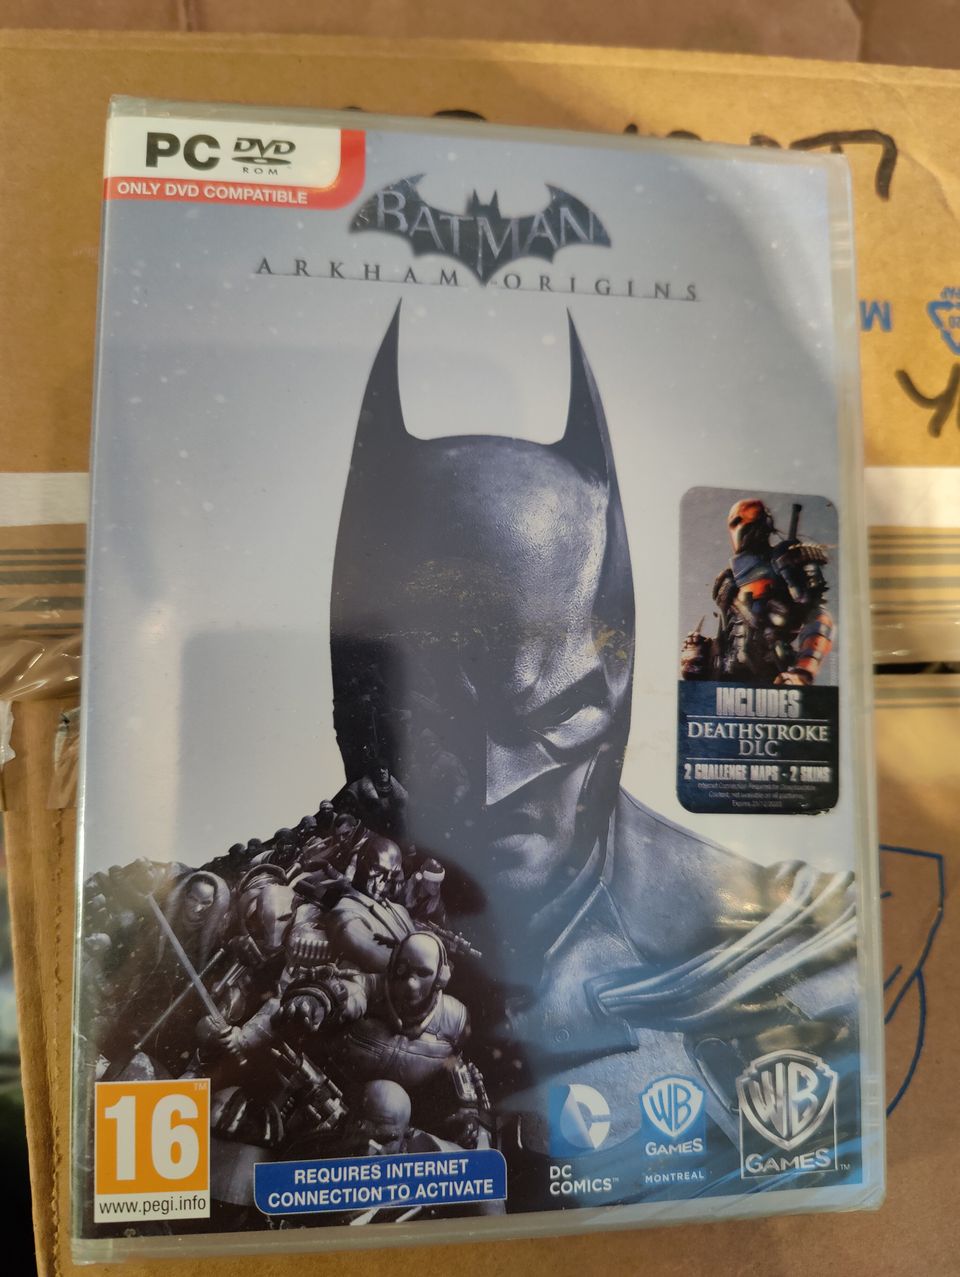 Batman arkham origins PC DVD sealed, new!